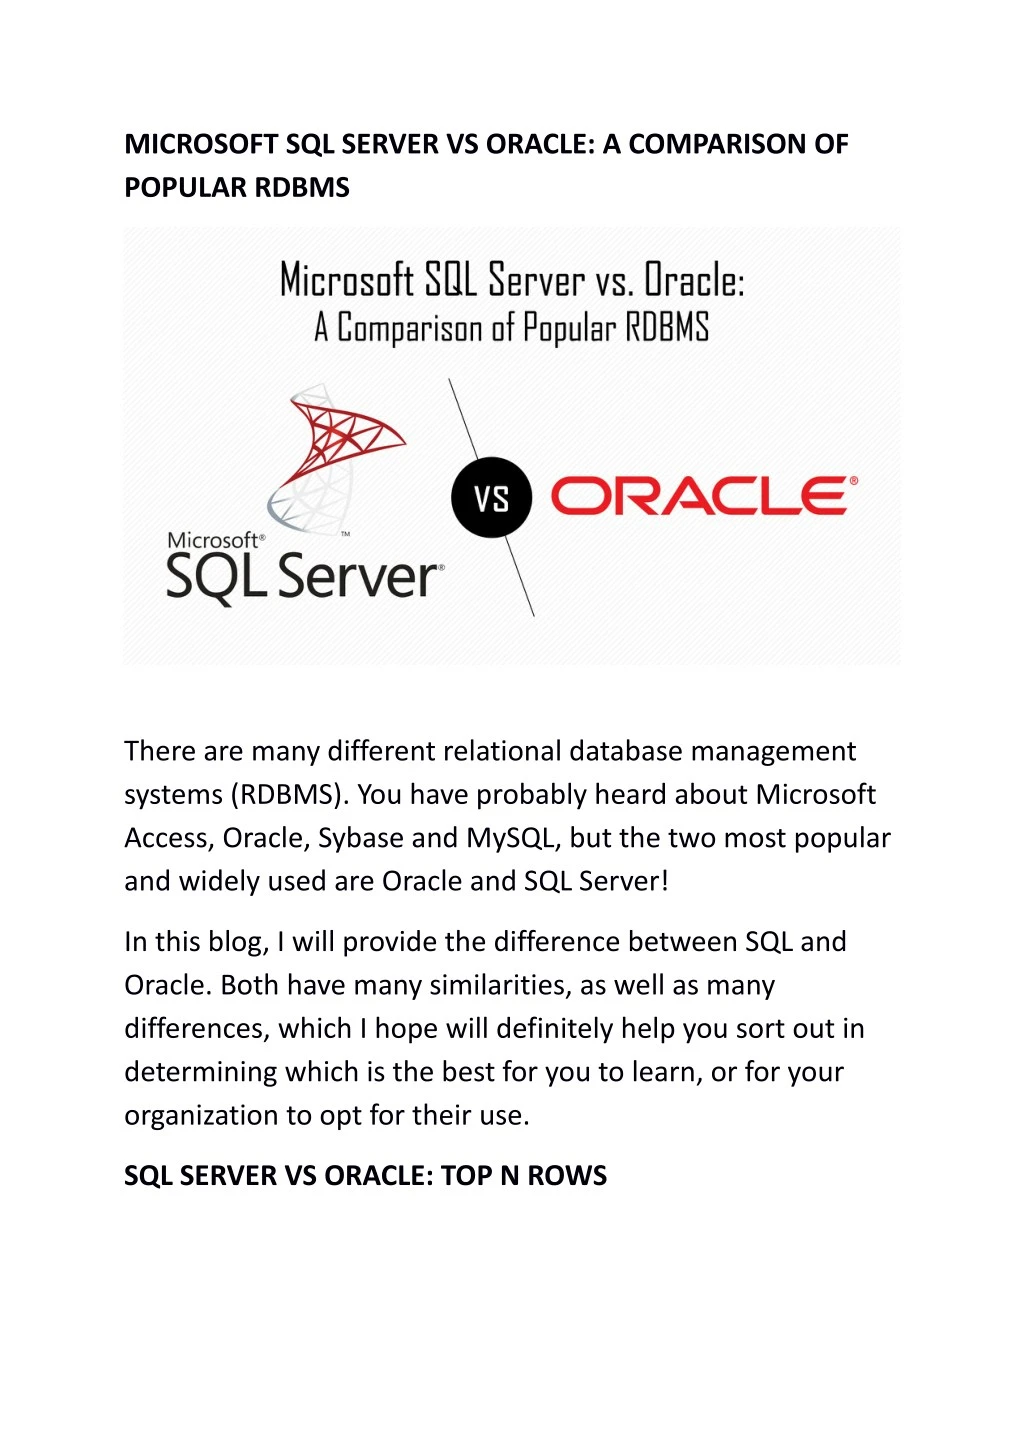 Ppt Microsoft Sql Server Vs Oracle A Comparison Of Popular Rdbms Powerpoint Presentation Id 4772